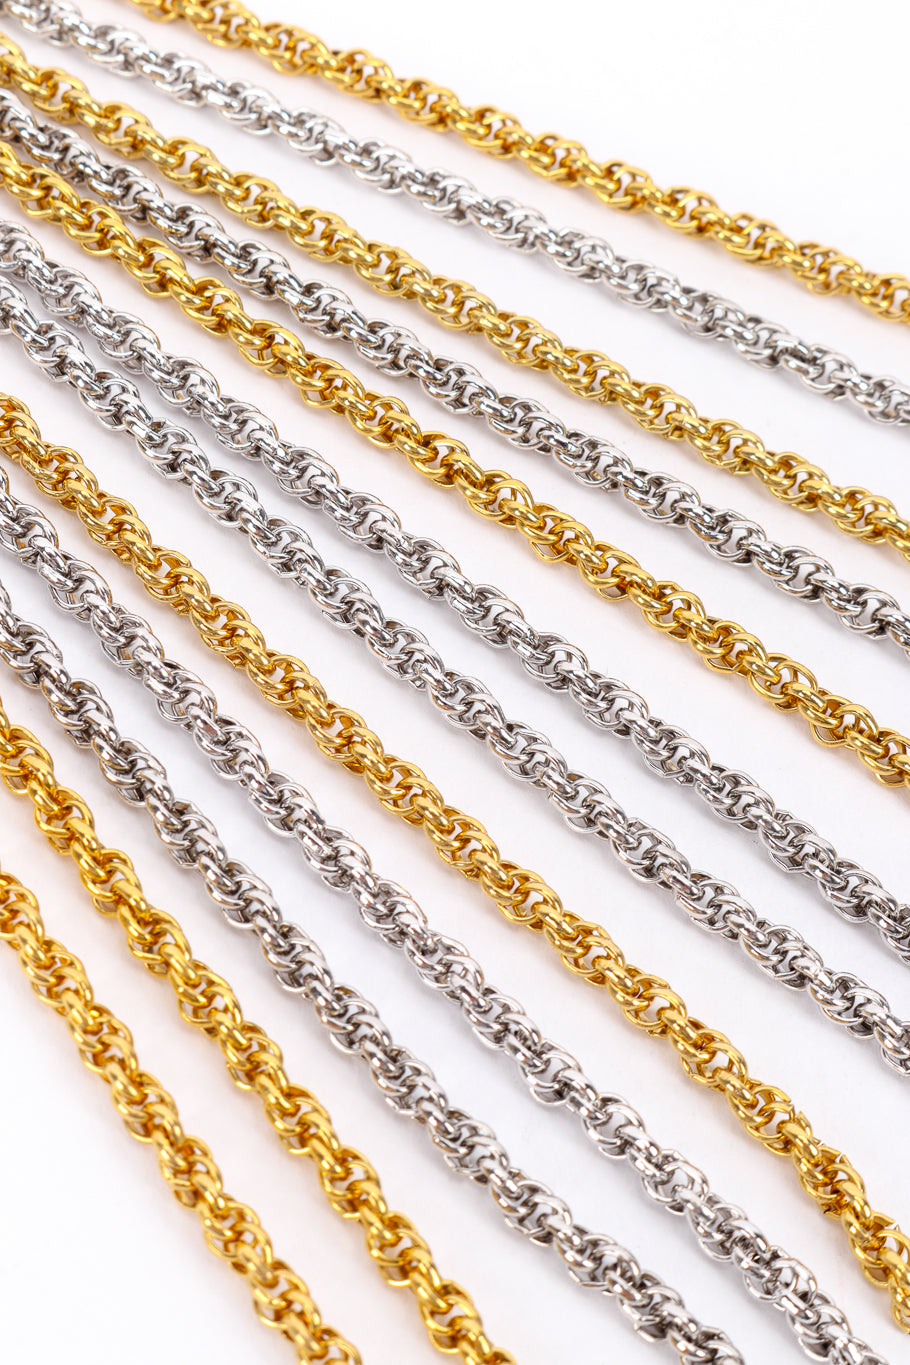 Vintage Les Bernard Knotted Mixed Metal Necklace chain closeup @recessla